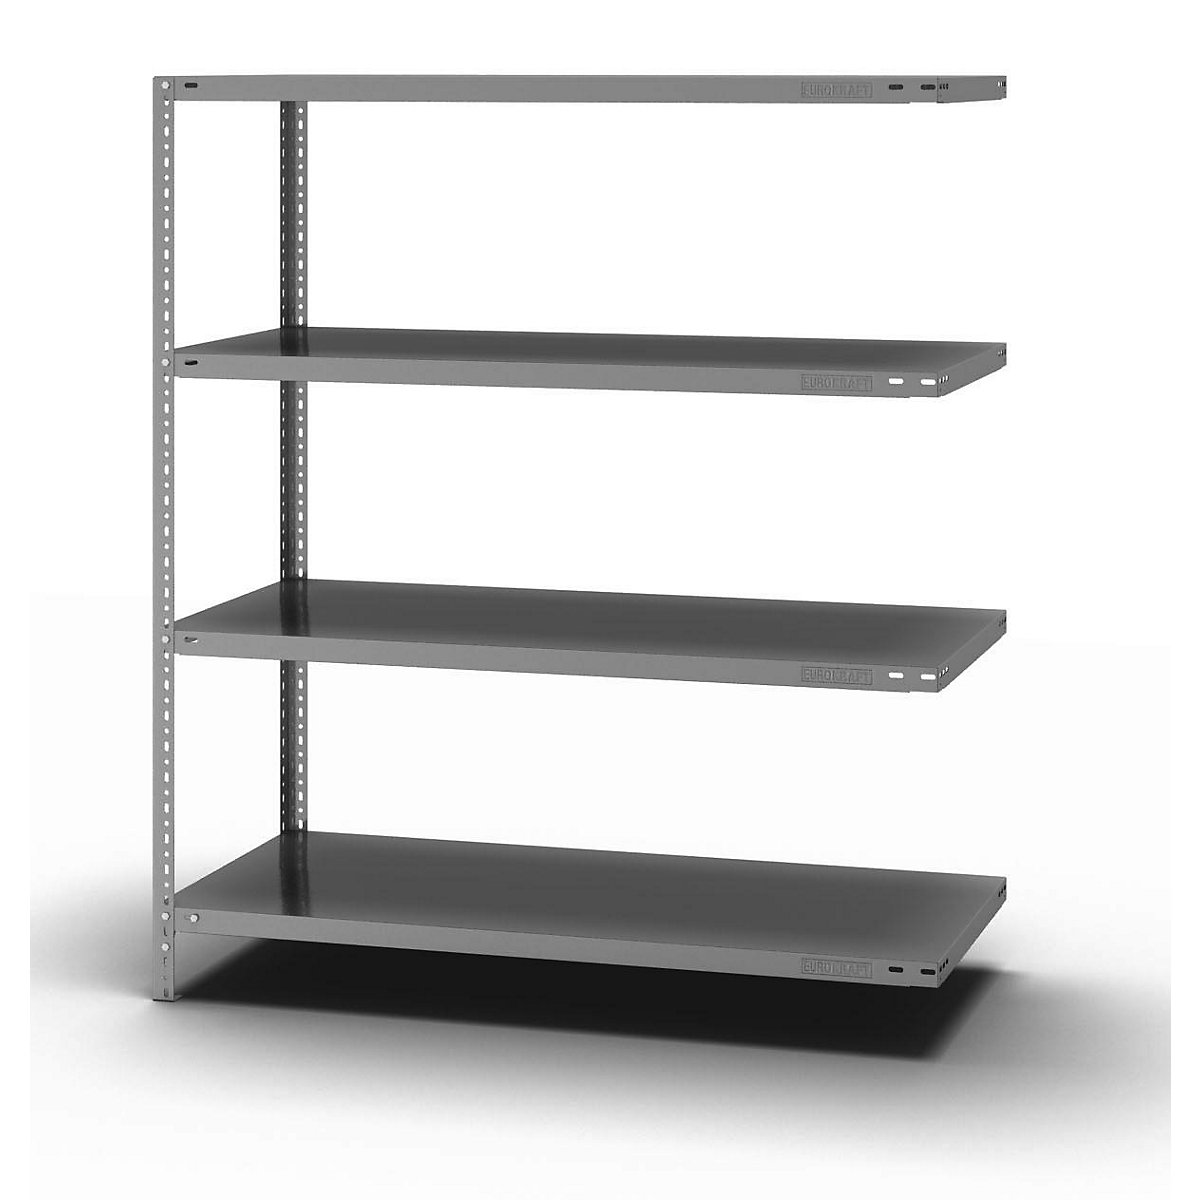 Bolt-together shelf unit, light duty, zinc plated – eurokraft pro, shelf unit height 1500 mm, shelf width 1300 mm, depth 600 mm, extension shelf unit-13